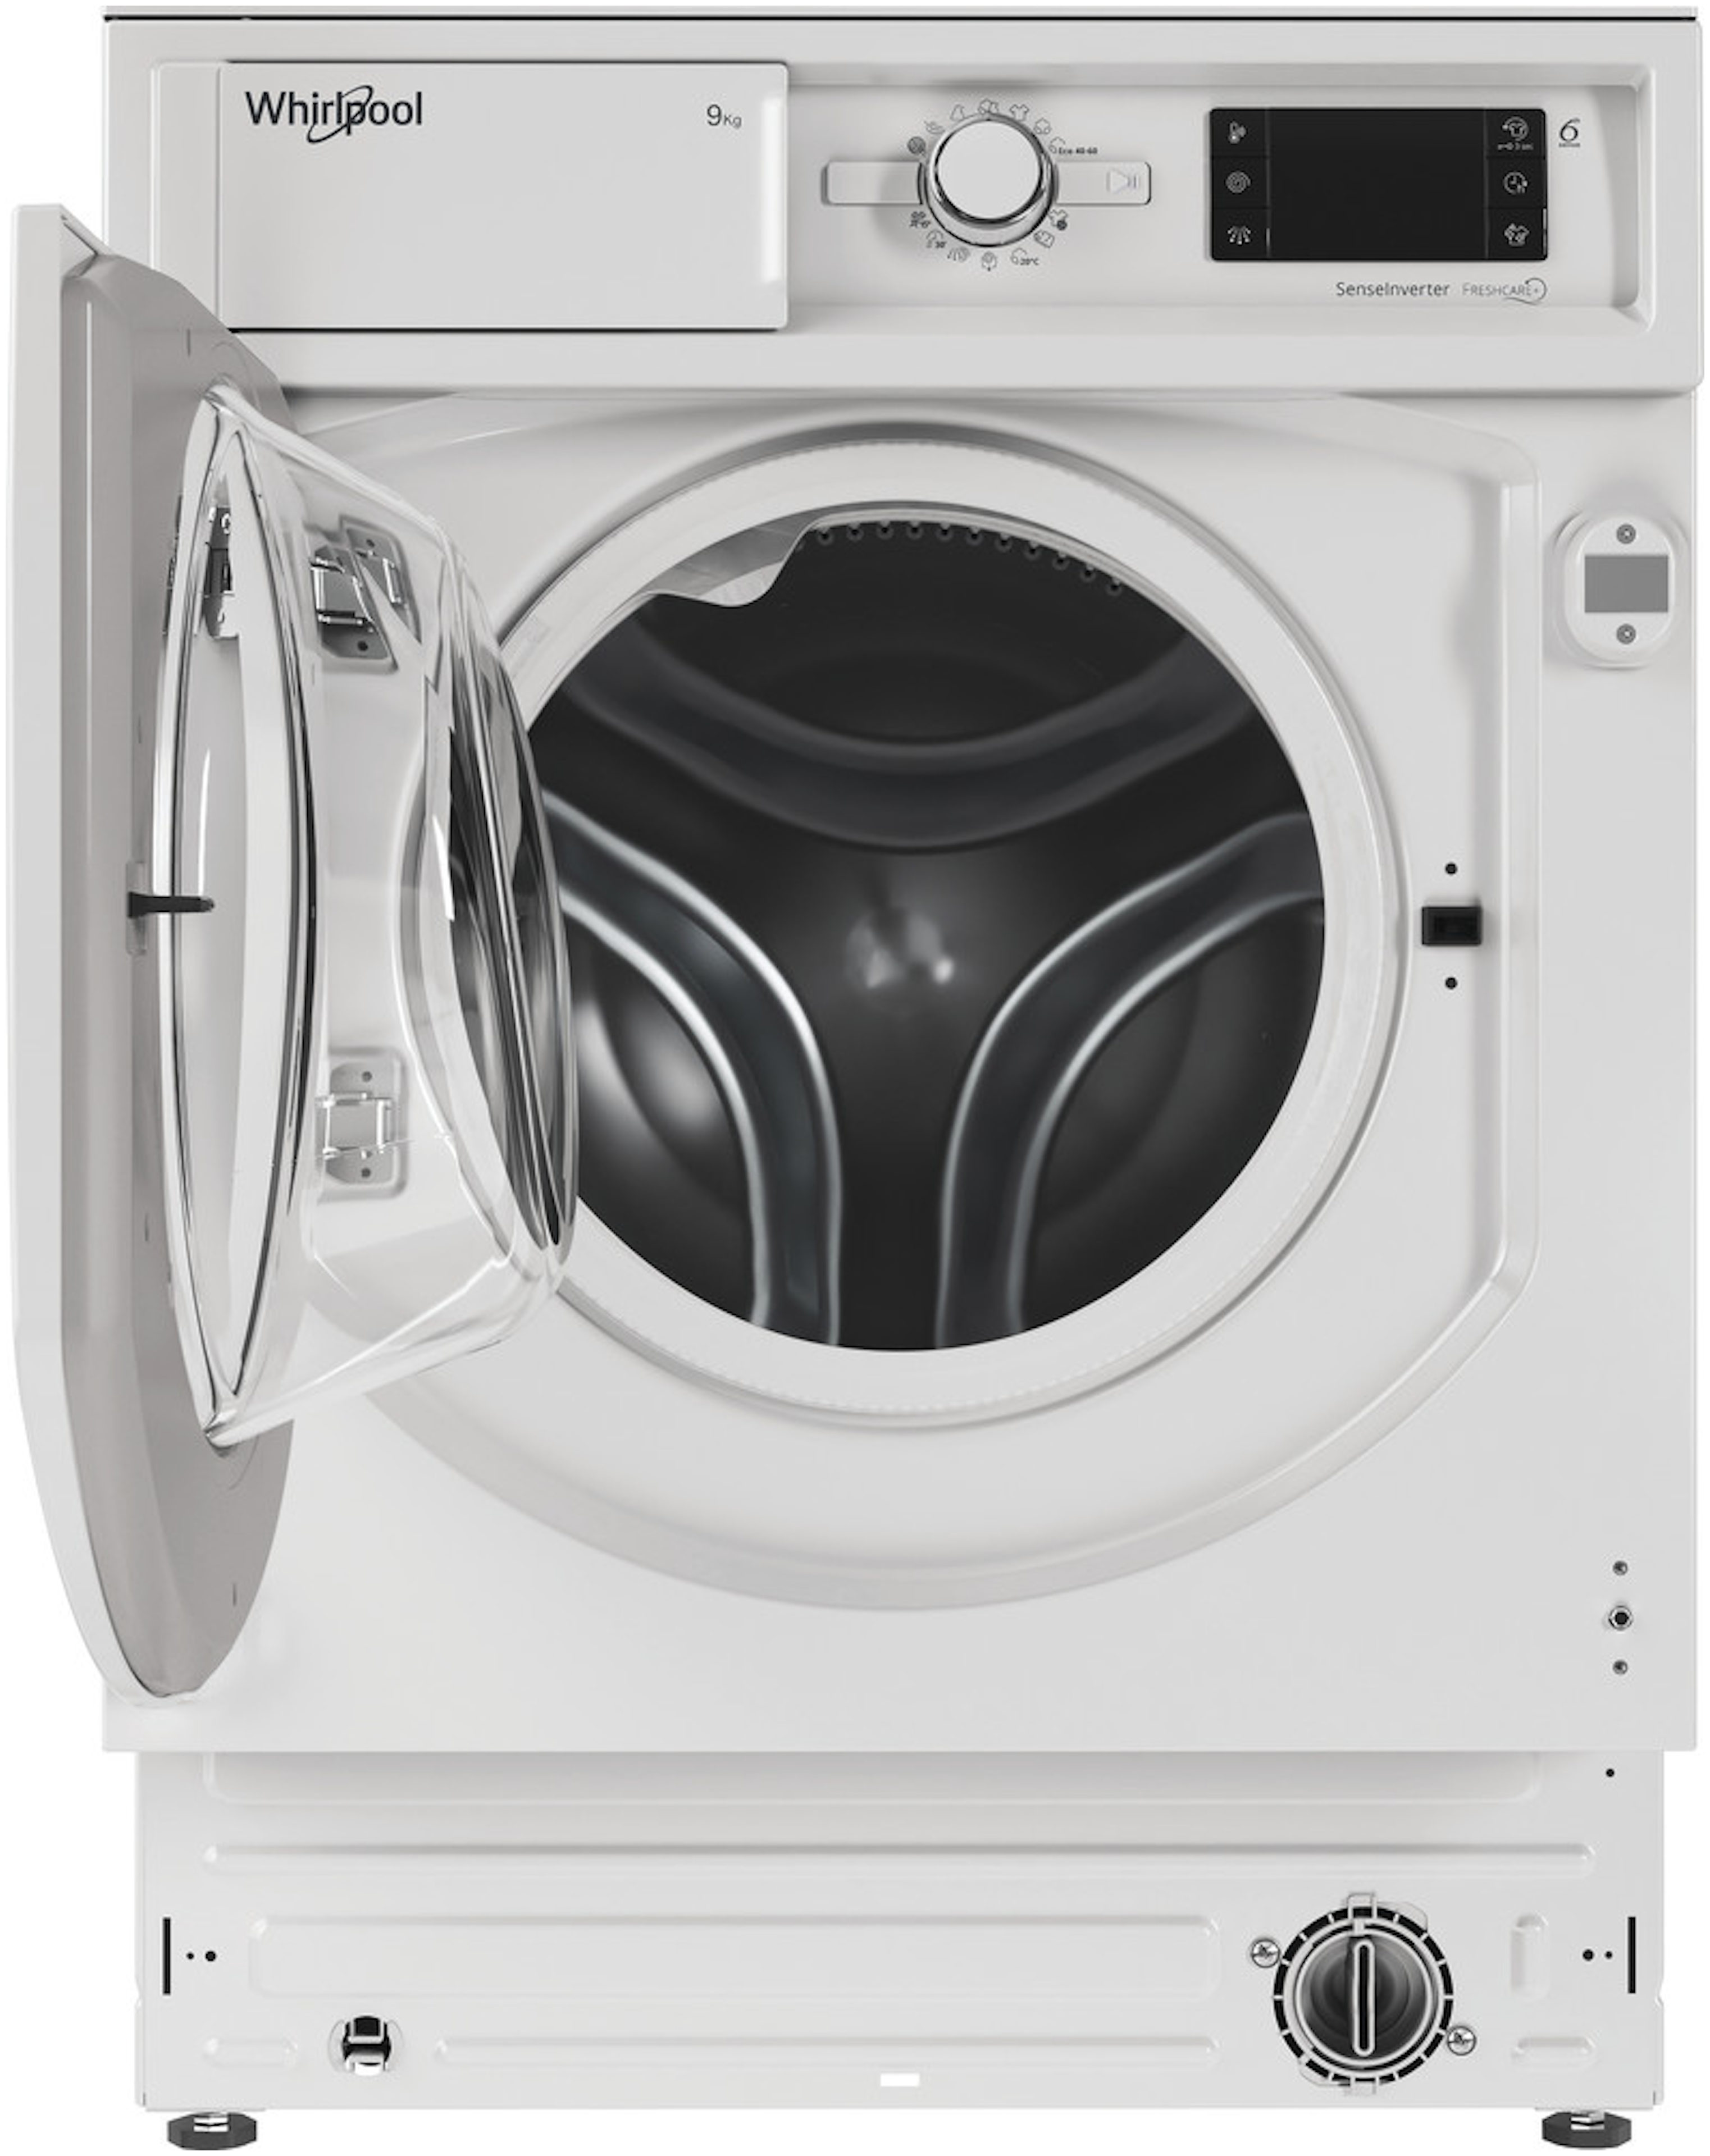 Whirlpool wasmachine BIWMWG91485EU afbeelding 3